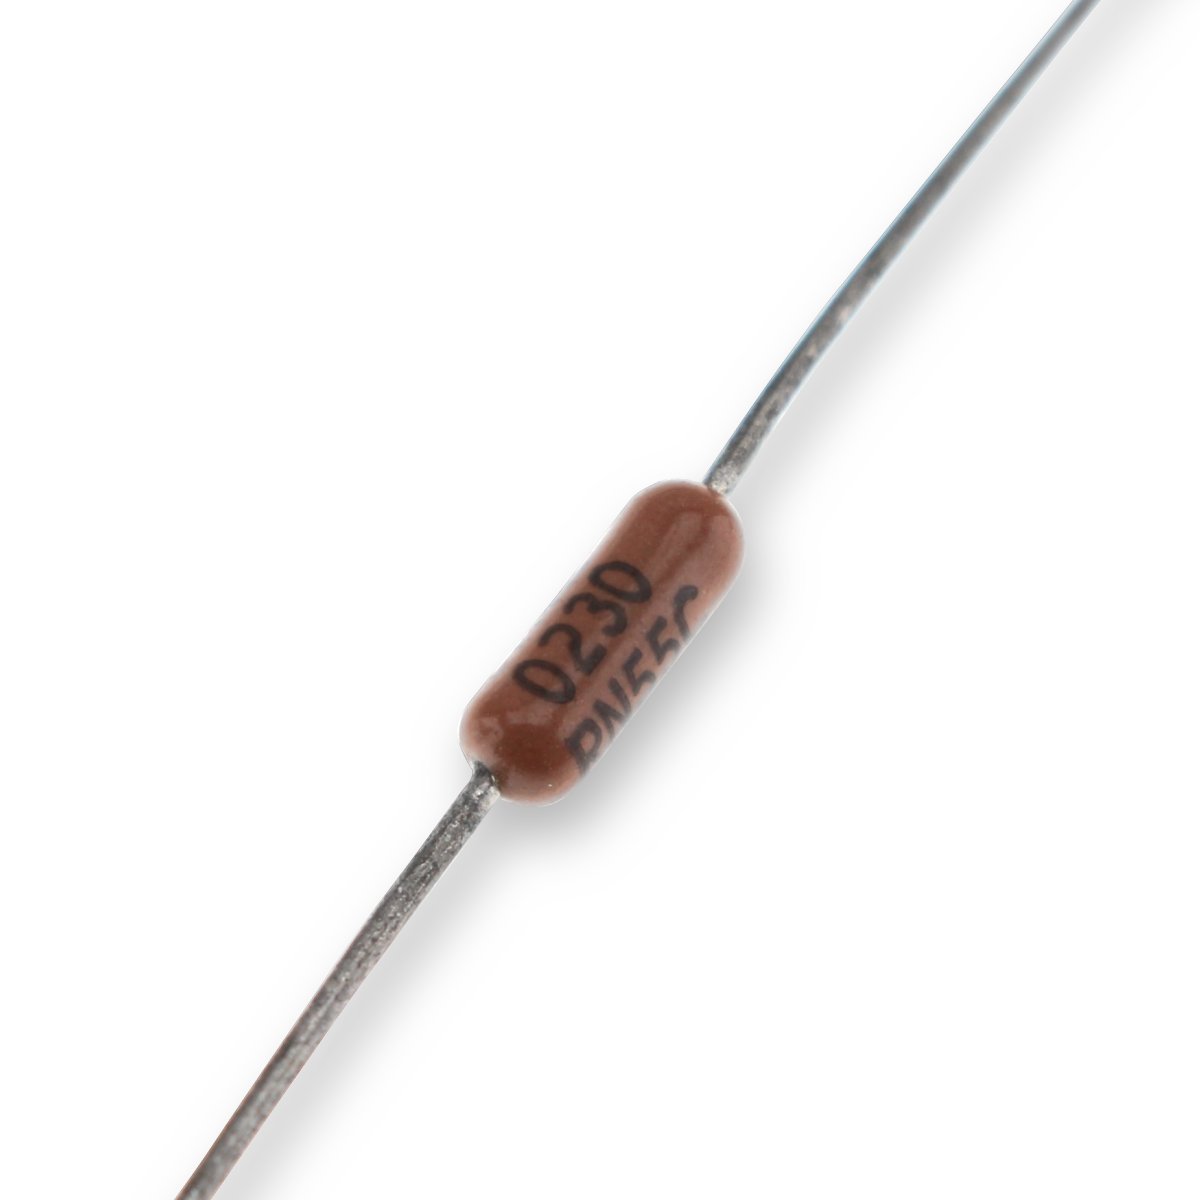 VISHAY DALE CMF55 Resistor 1% 50ppm 200 Ohm